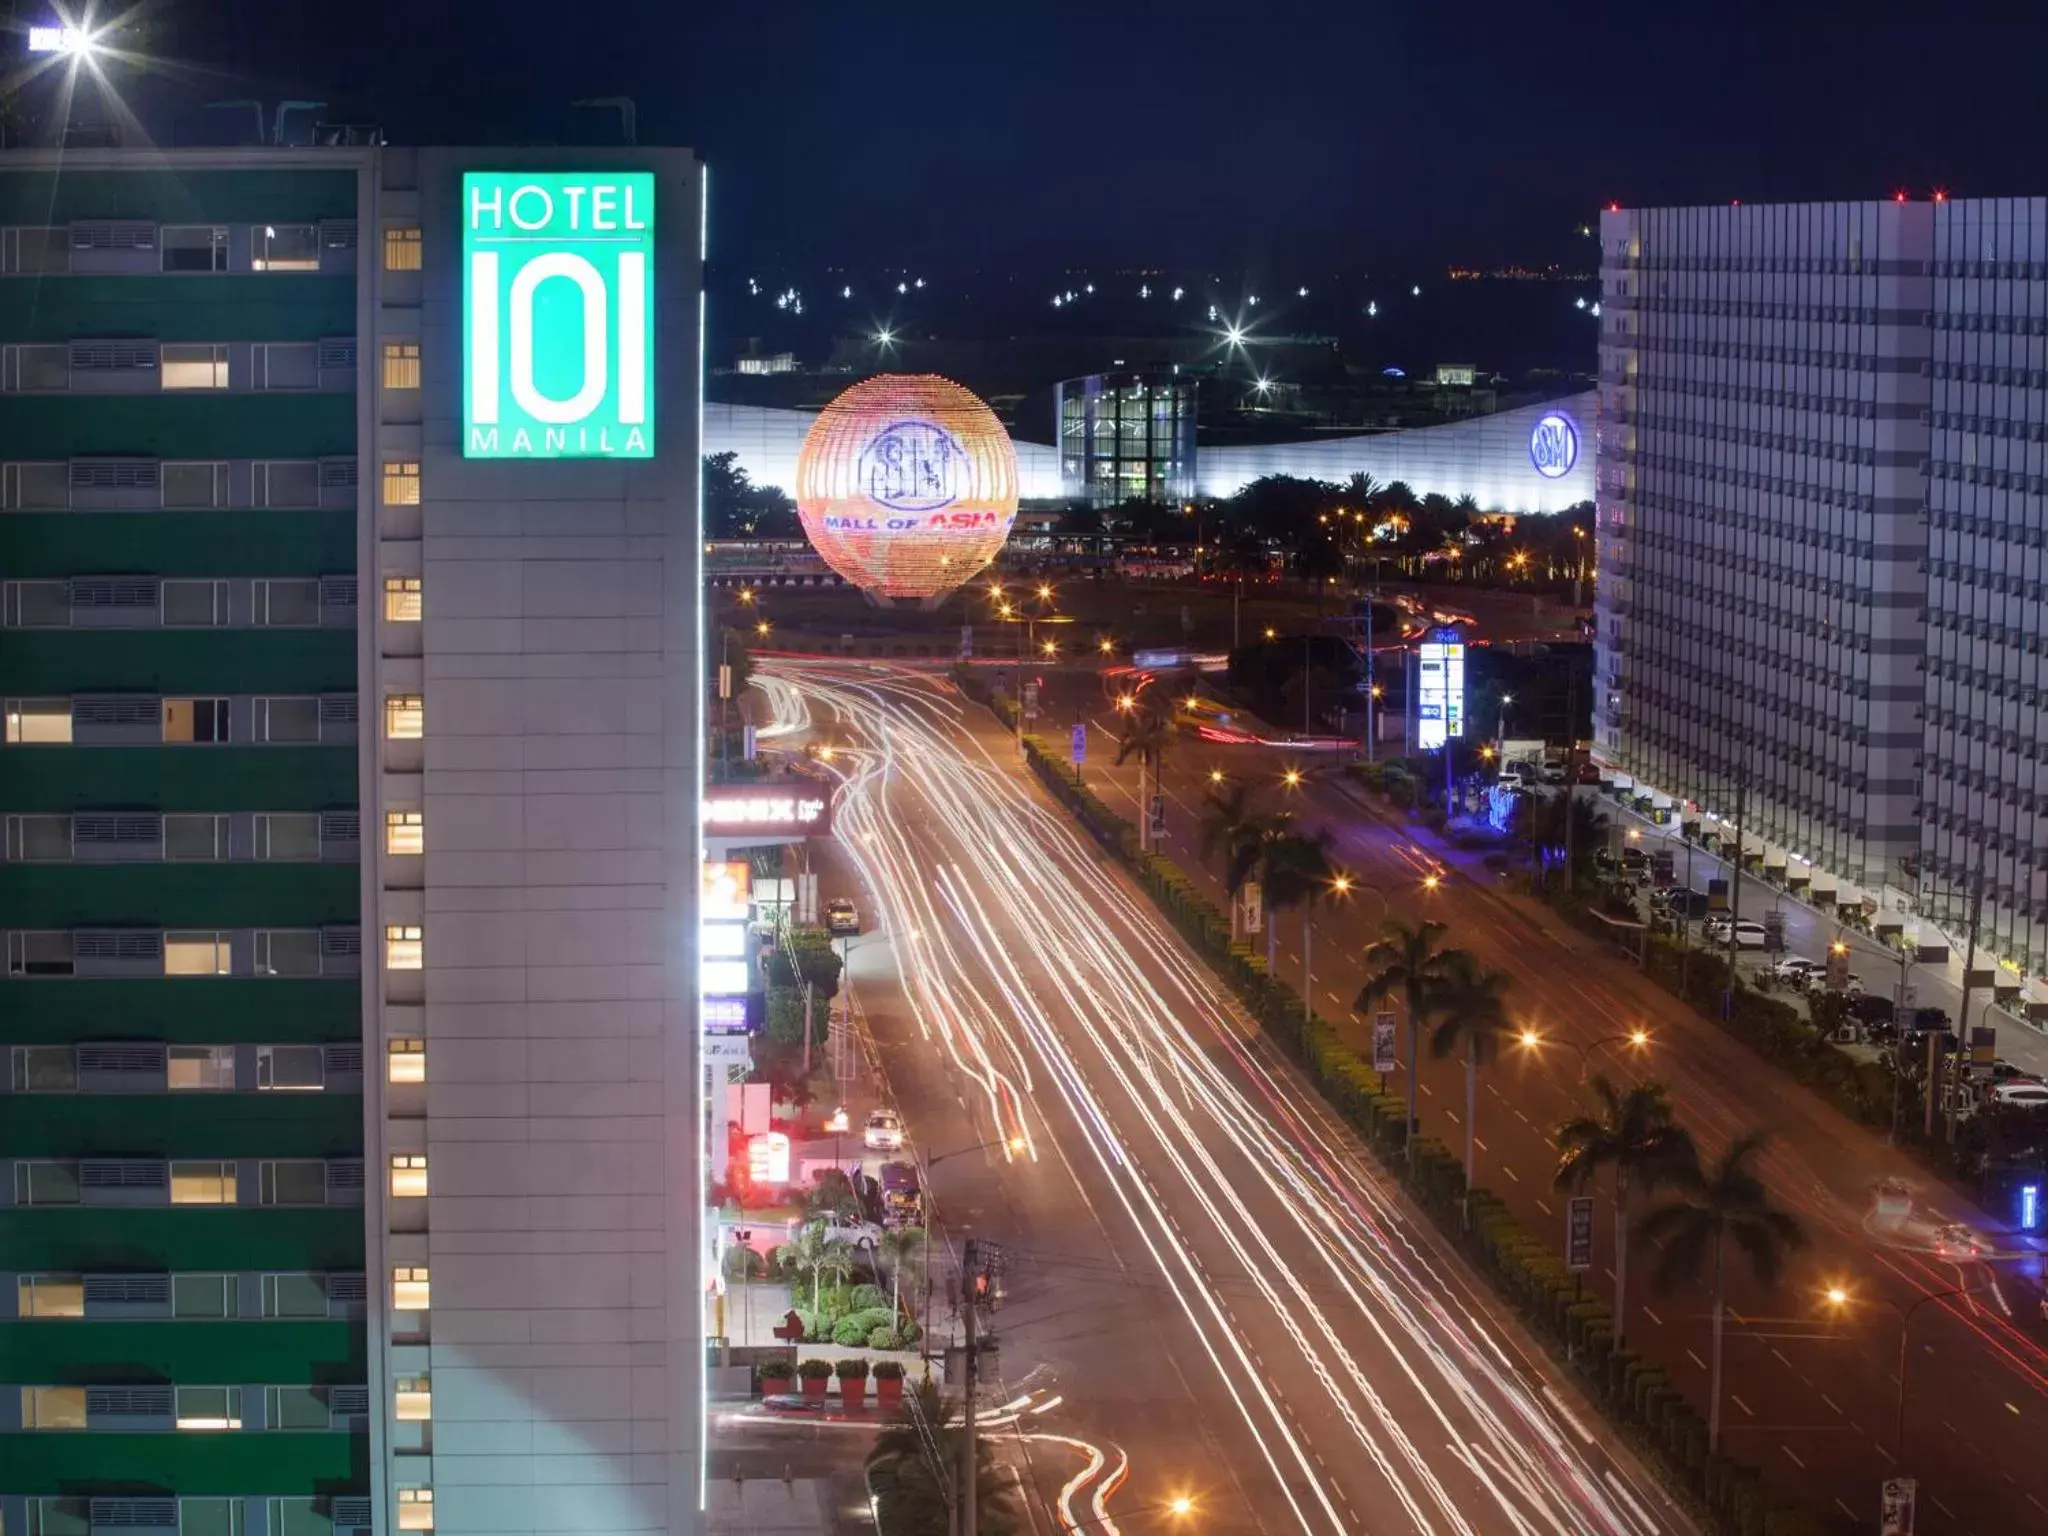 Nearby landmark in Hotel 101 - Manila